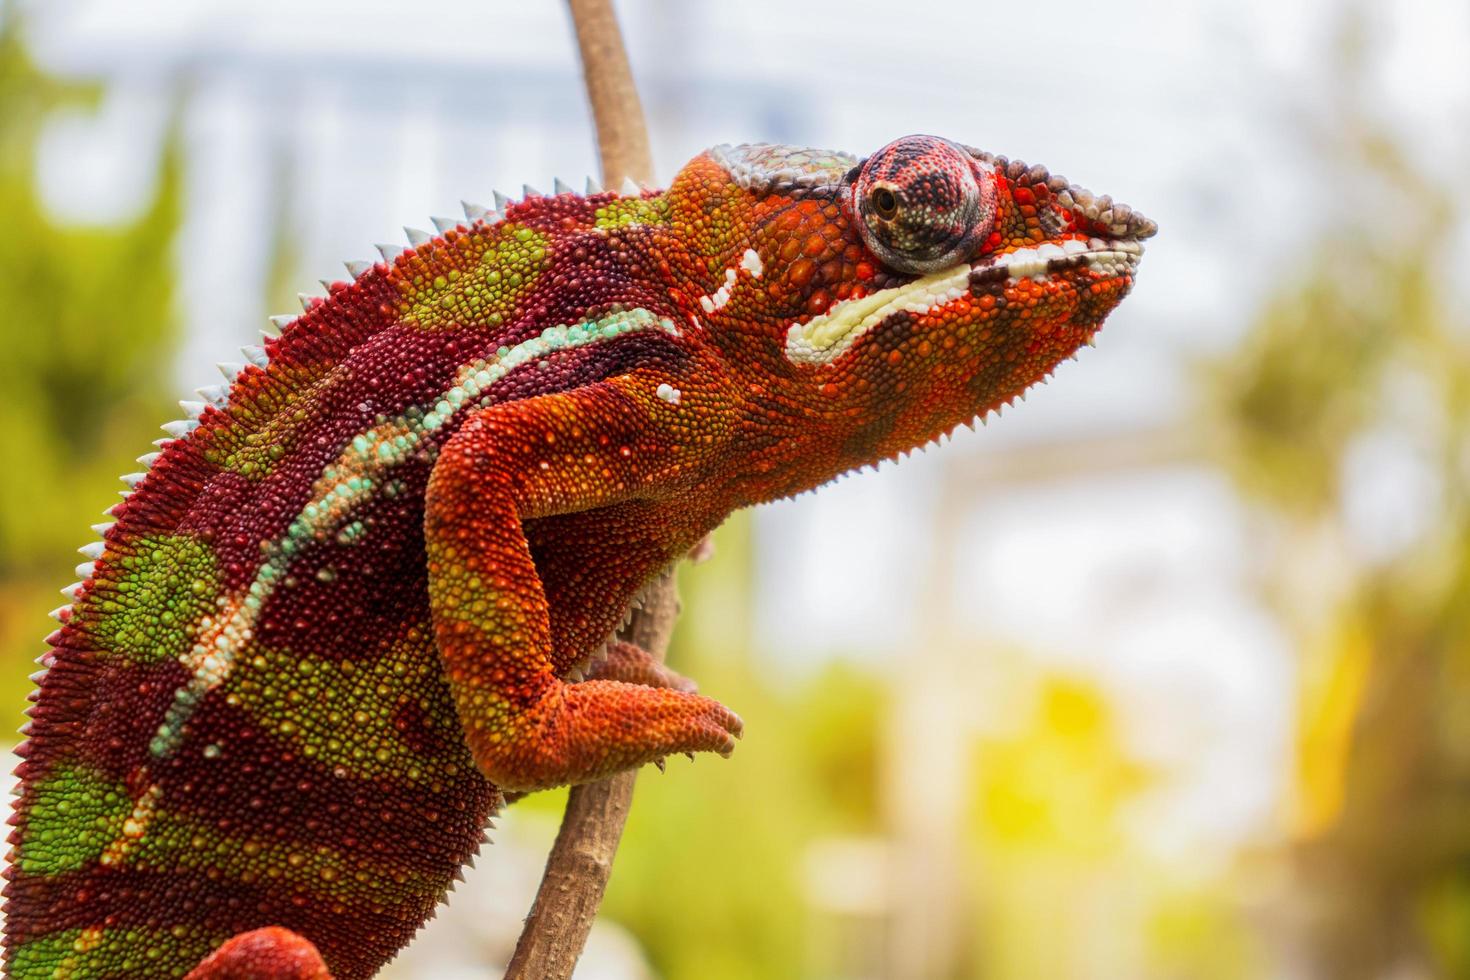 Chameleon balancing on branch photo